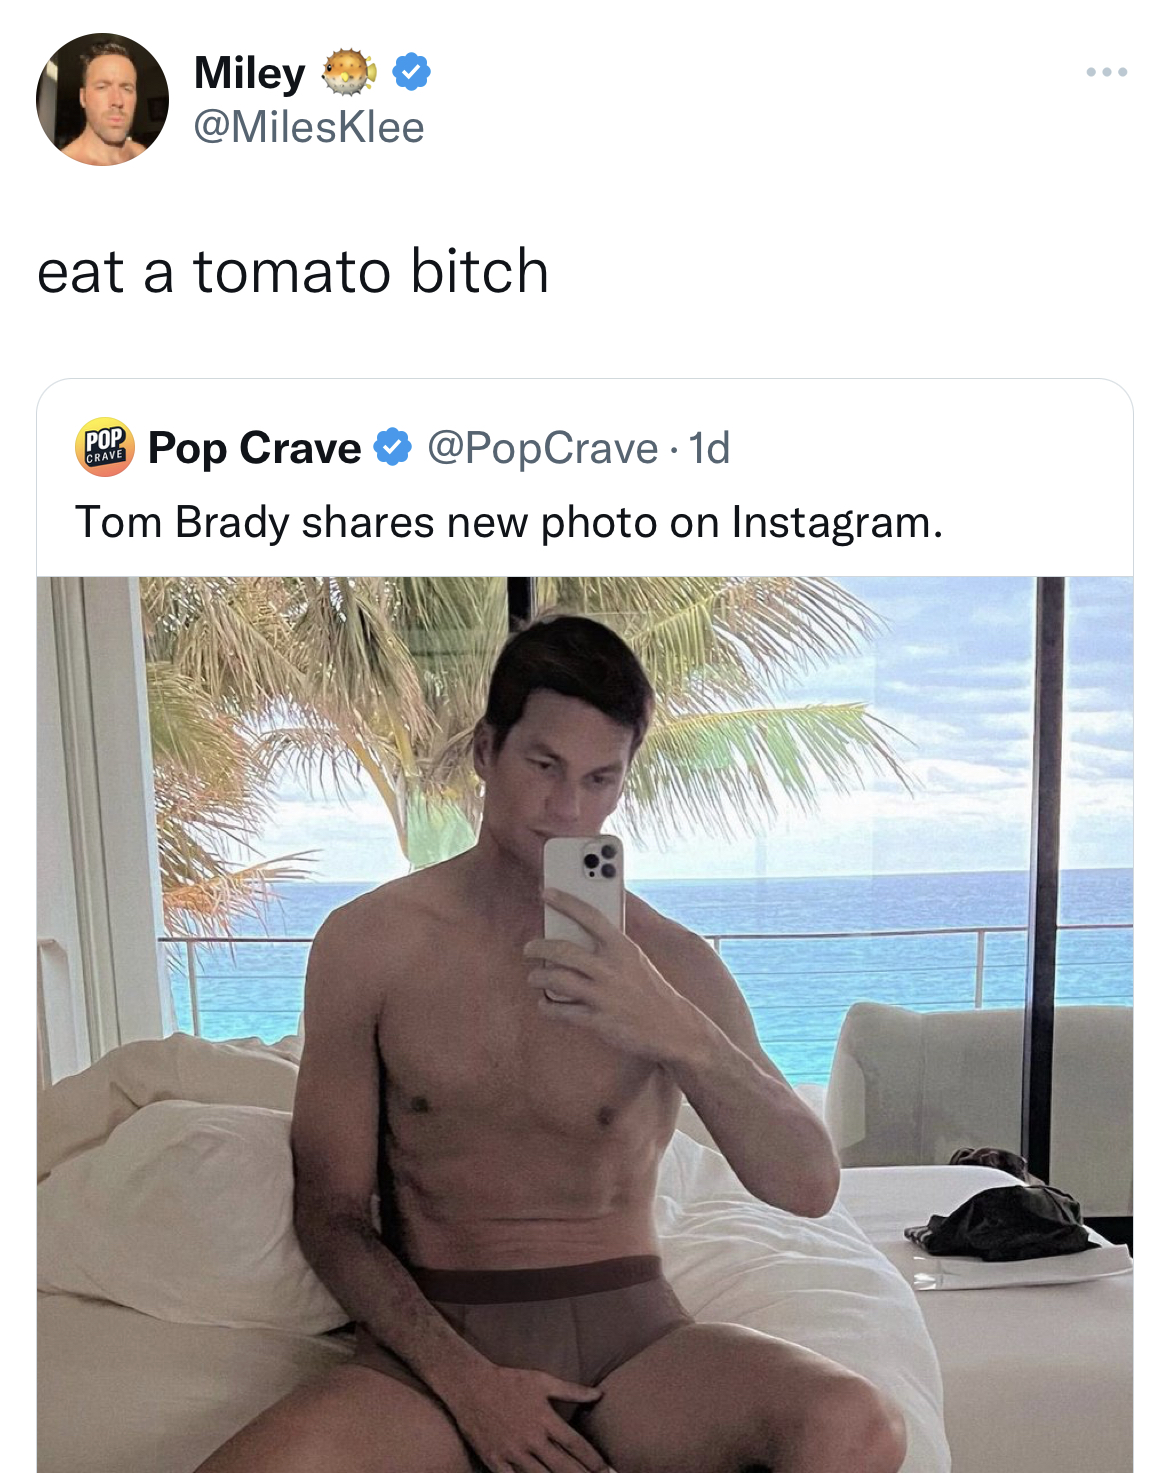 Untamed Tweets - shoulder - Miley eat a tomato bitch Pop Crave .1d Tom Brady new photo on Instagram. E www